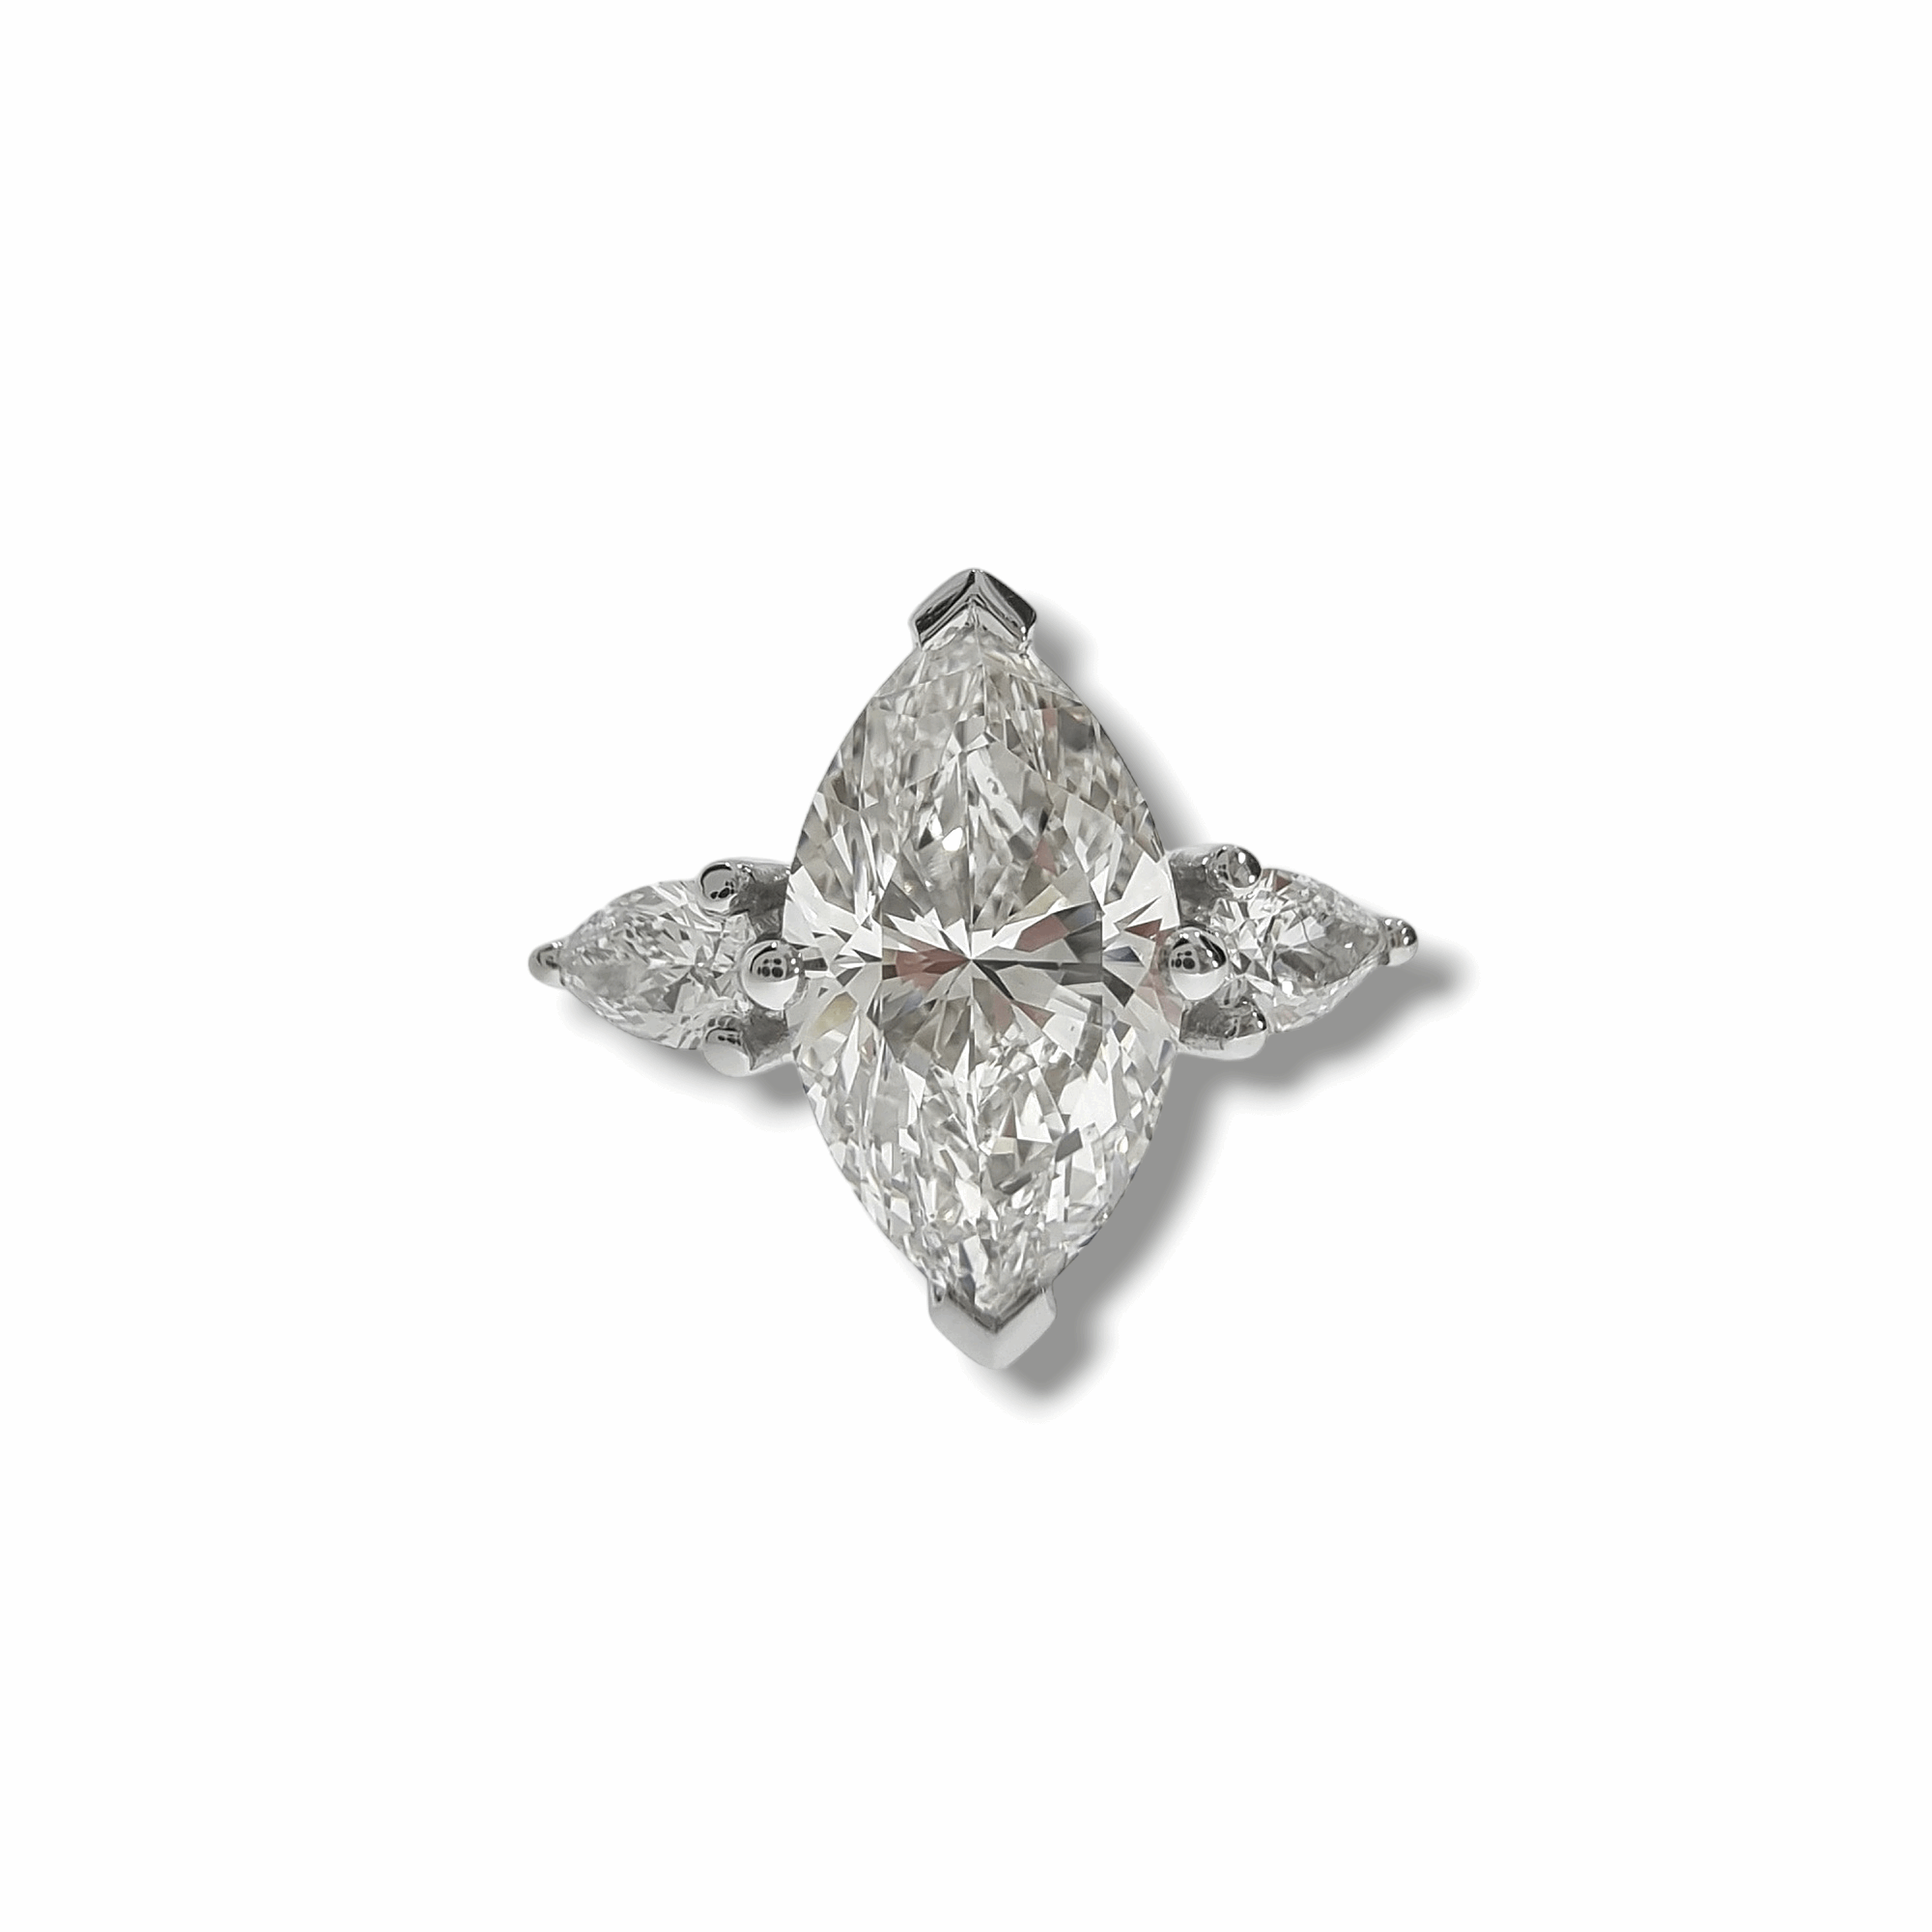 2.31ct Marquise Cut Diamond Ring